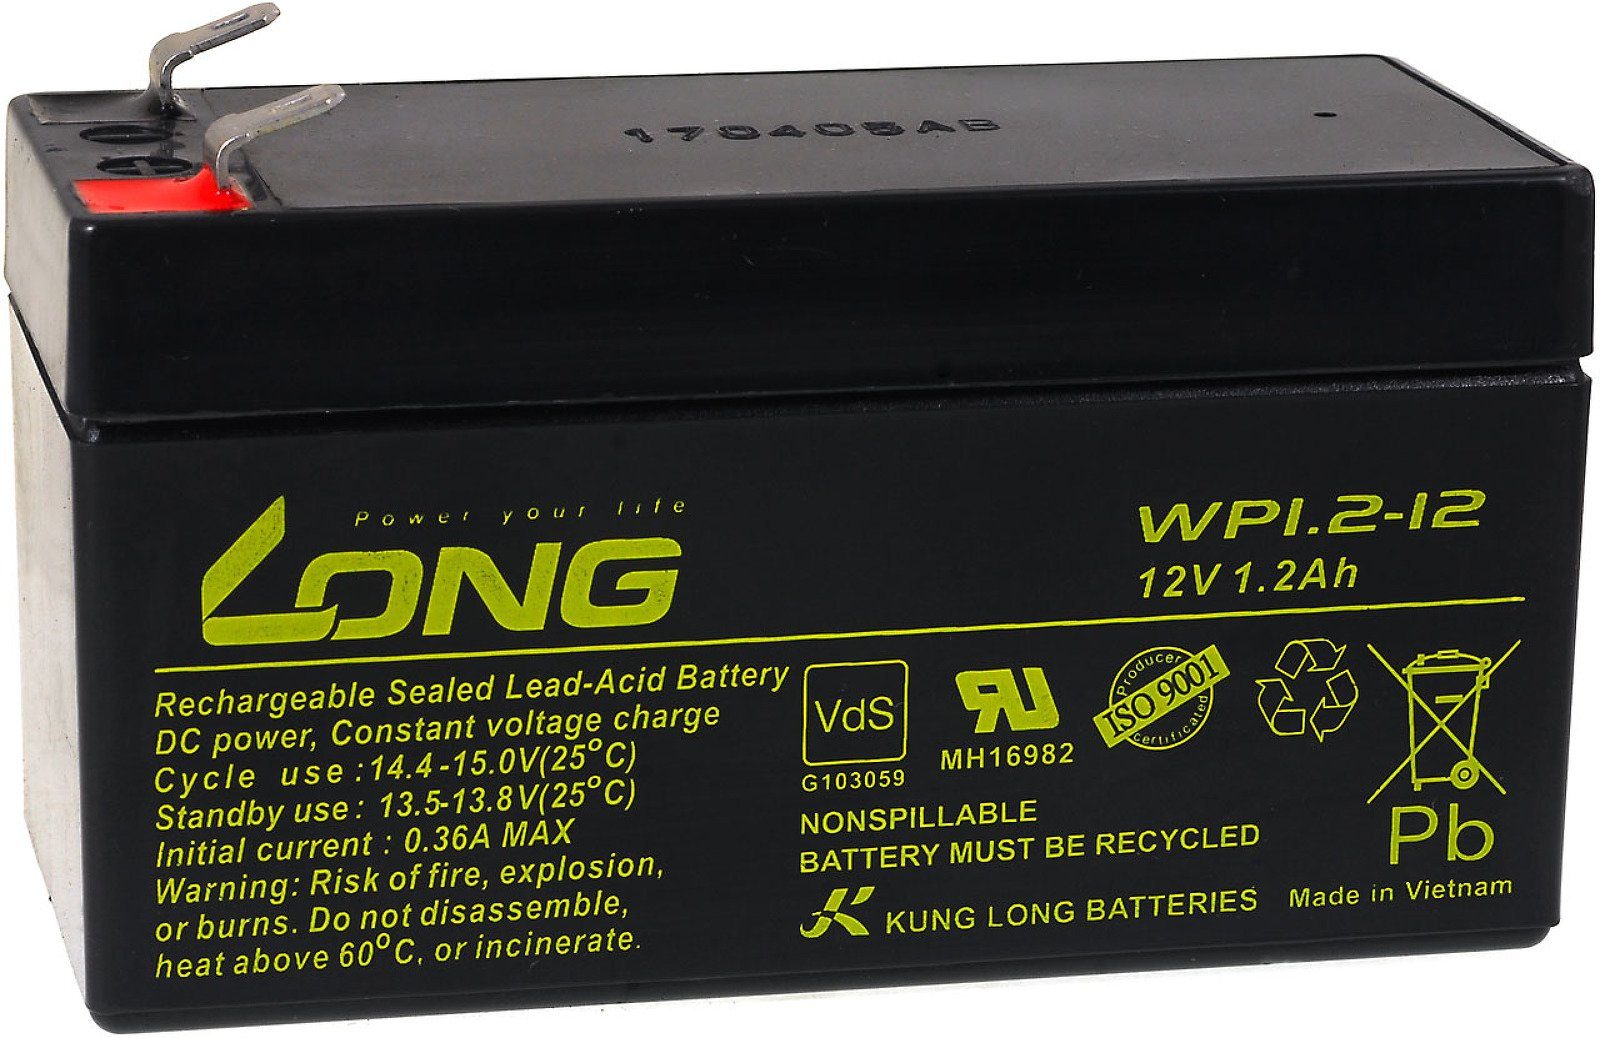 Powery Kung Long WP1.2-12 Bleiakku 1200 V) VdS (12 mAh Bleiakkus